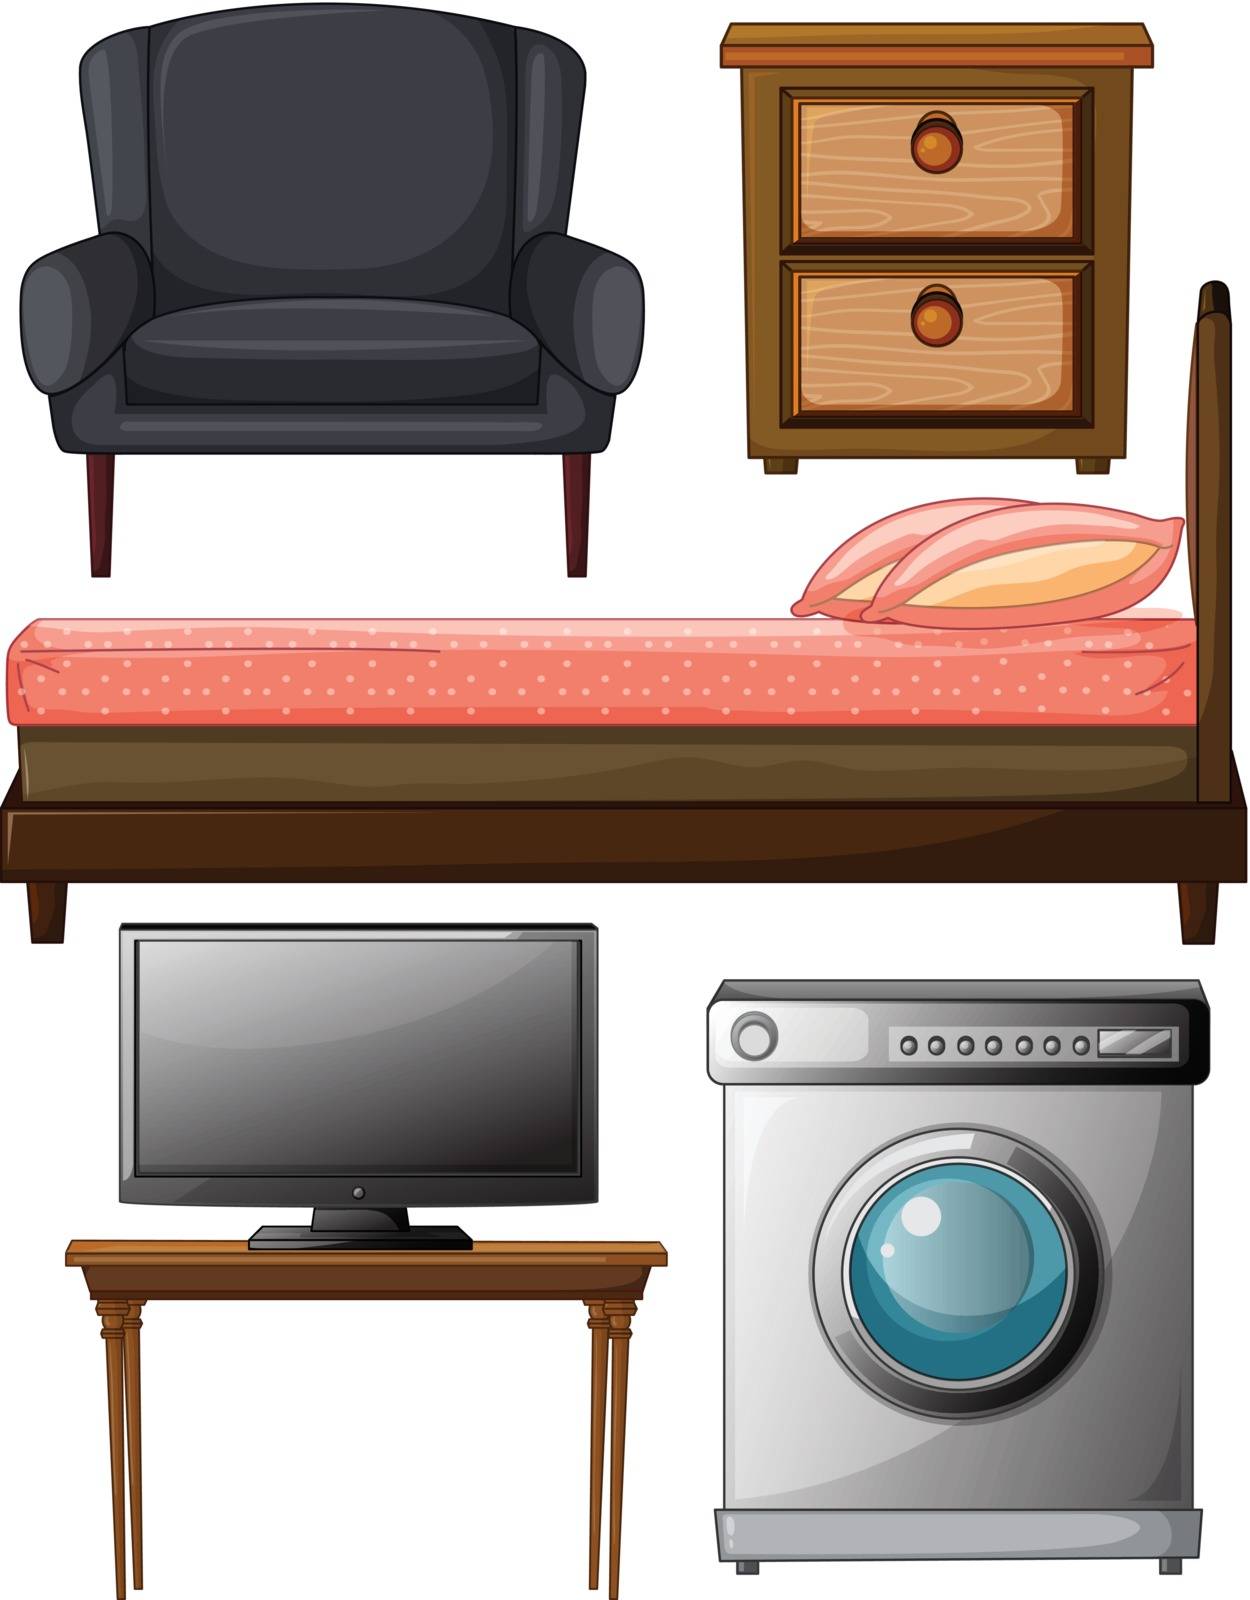 Useful furnitures by iimages